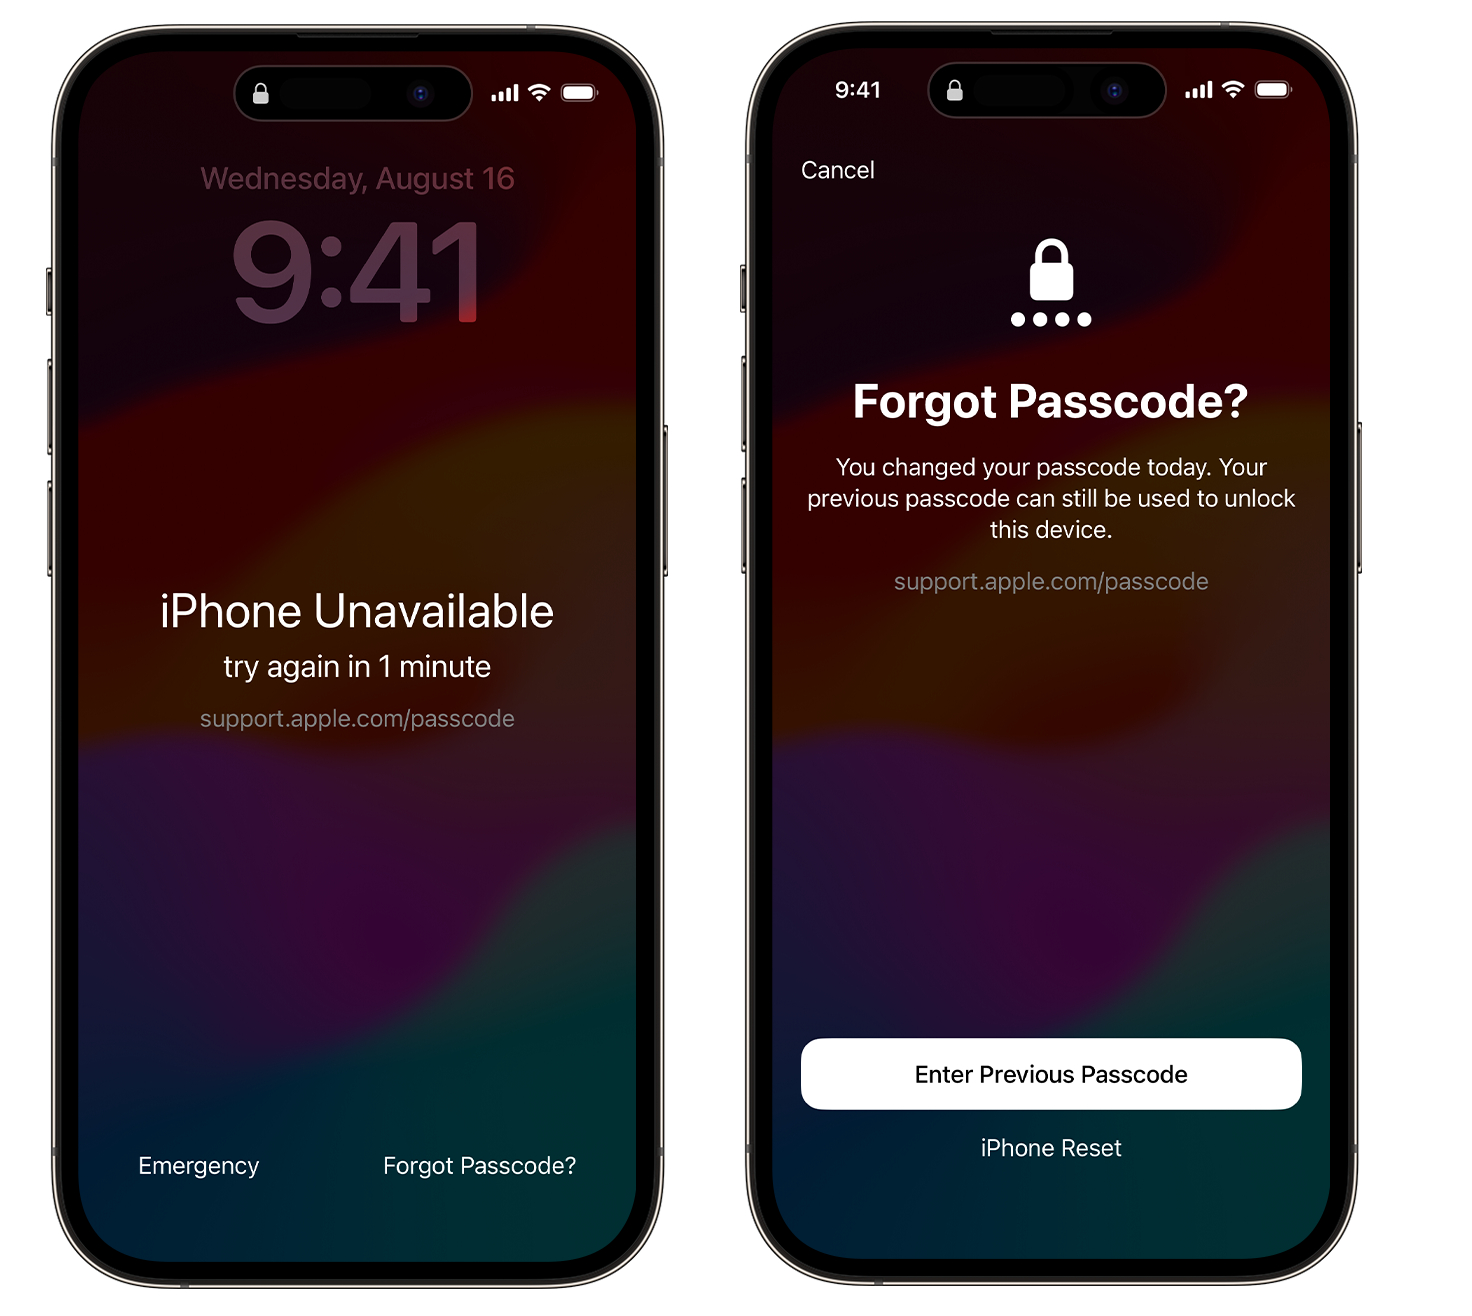 iphone忘記螢幕密碼怎麼辦，3種免電腦解鎖方法! - 解除iPhone已停用 - 敗家達人推薦